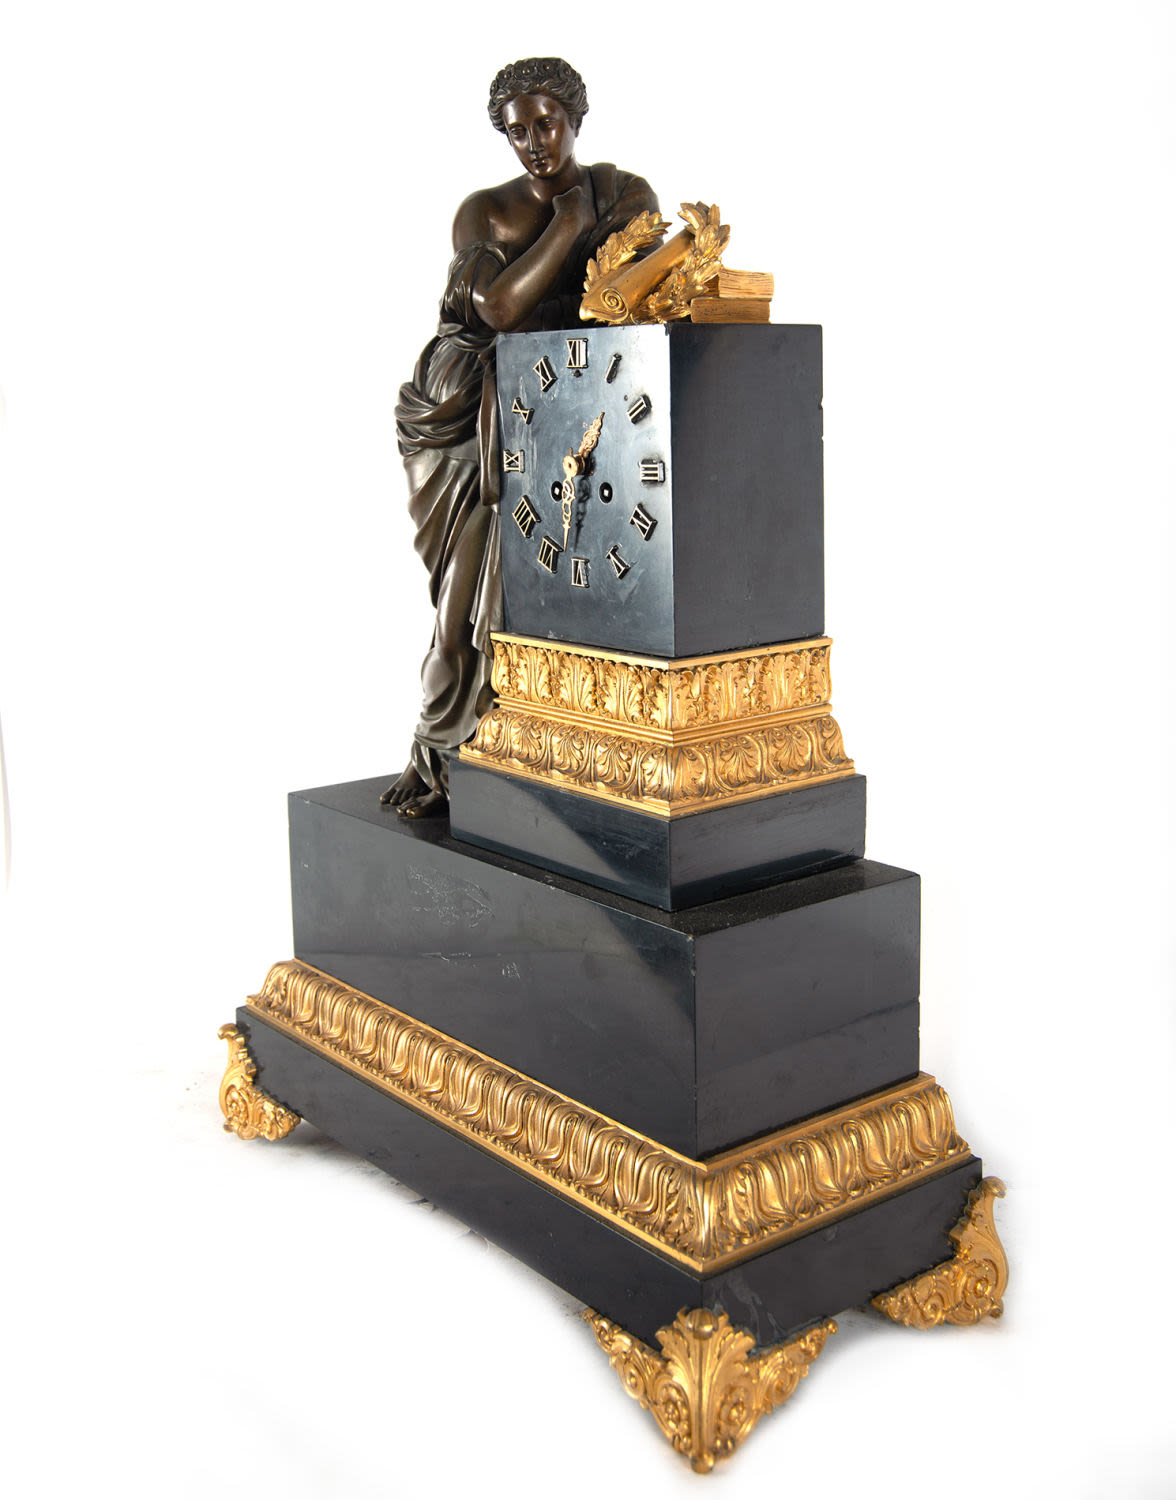 Large mantle clock representing the Goddess Venus, 19th century - Image 2 of 8